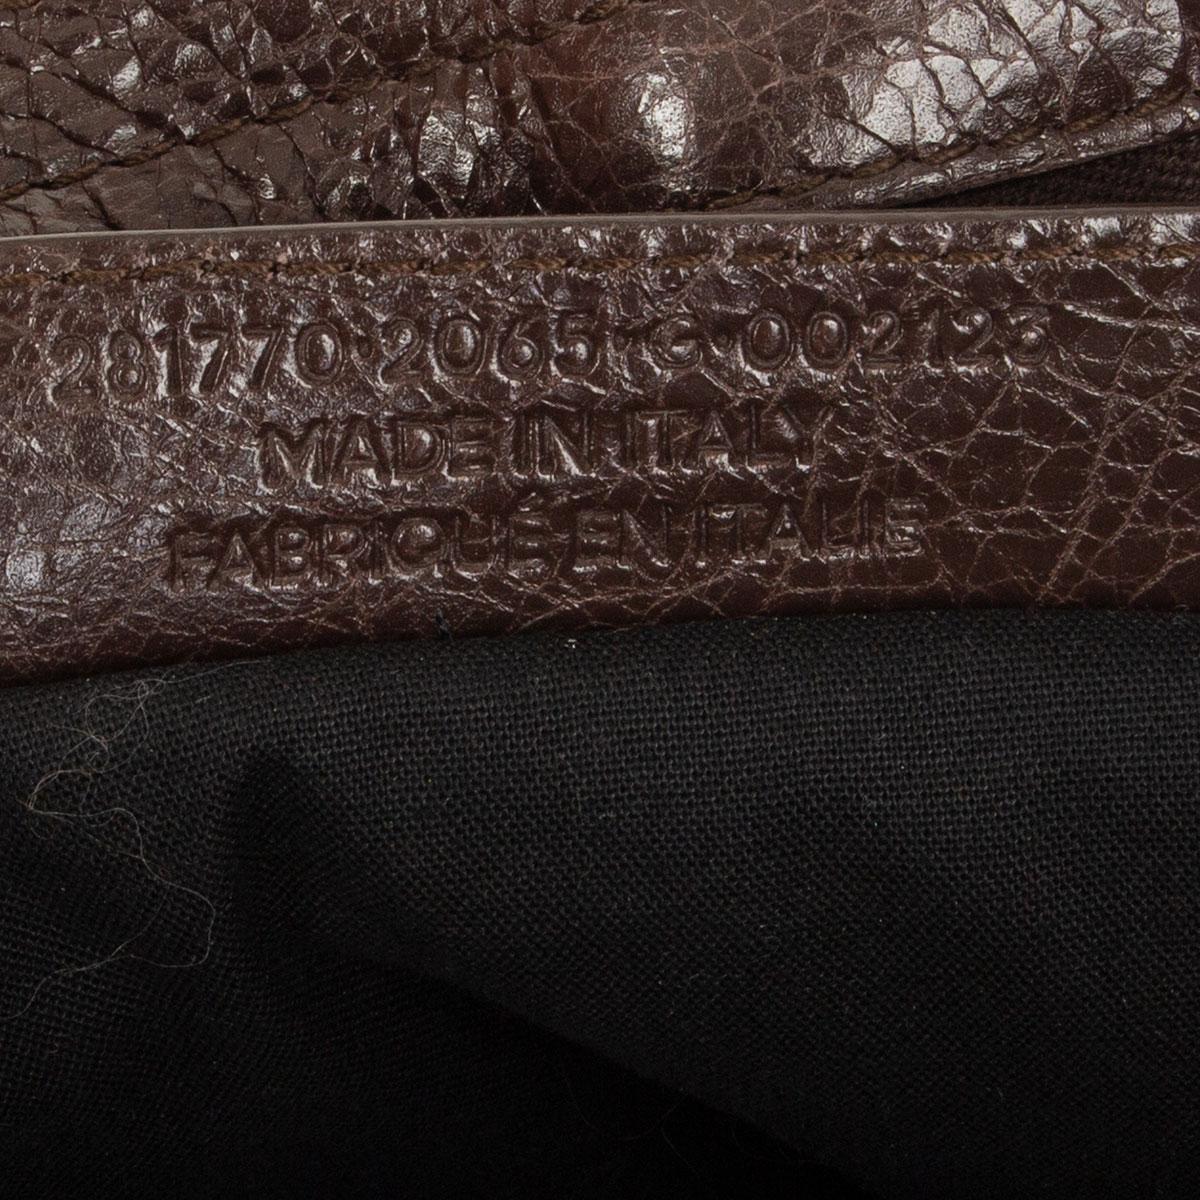 Black BALENCIAGA dark brown distressed leather GIANT 12 CITY Shoulder Bag